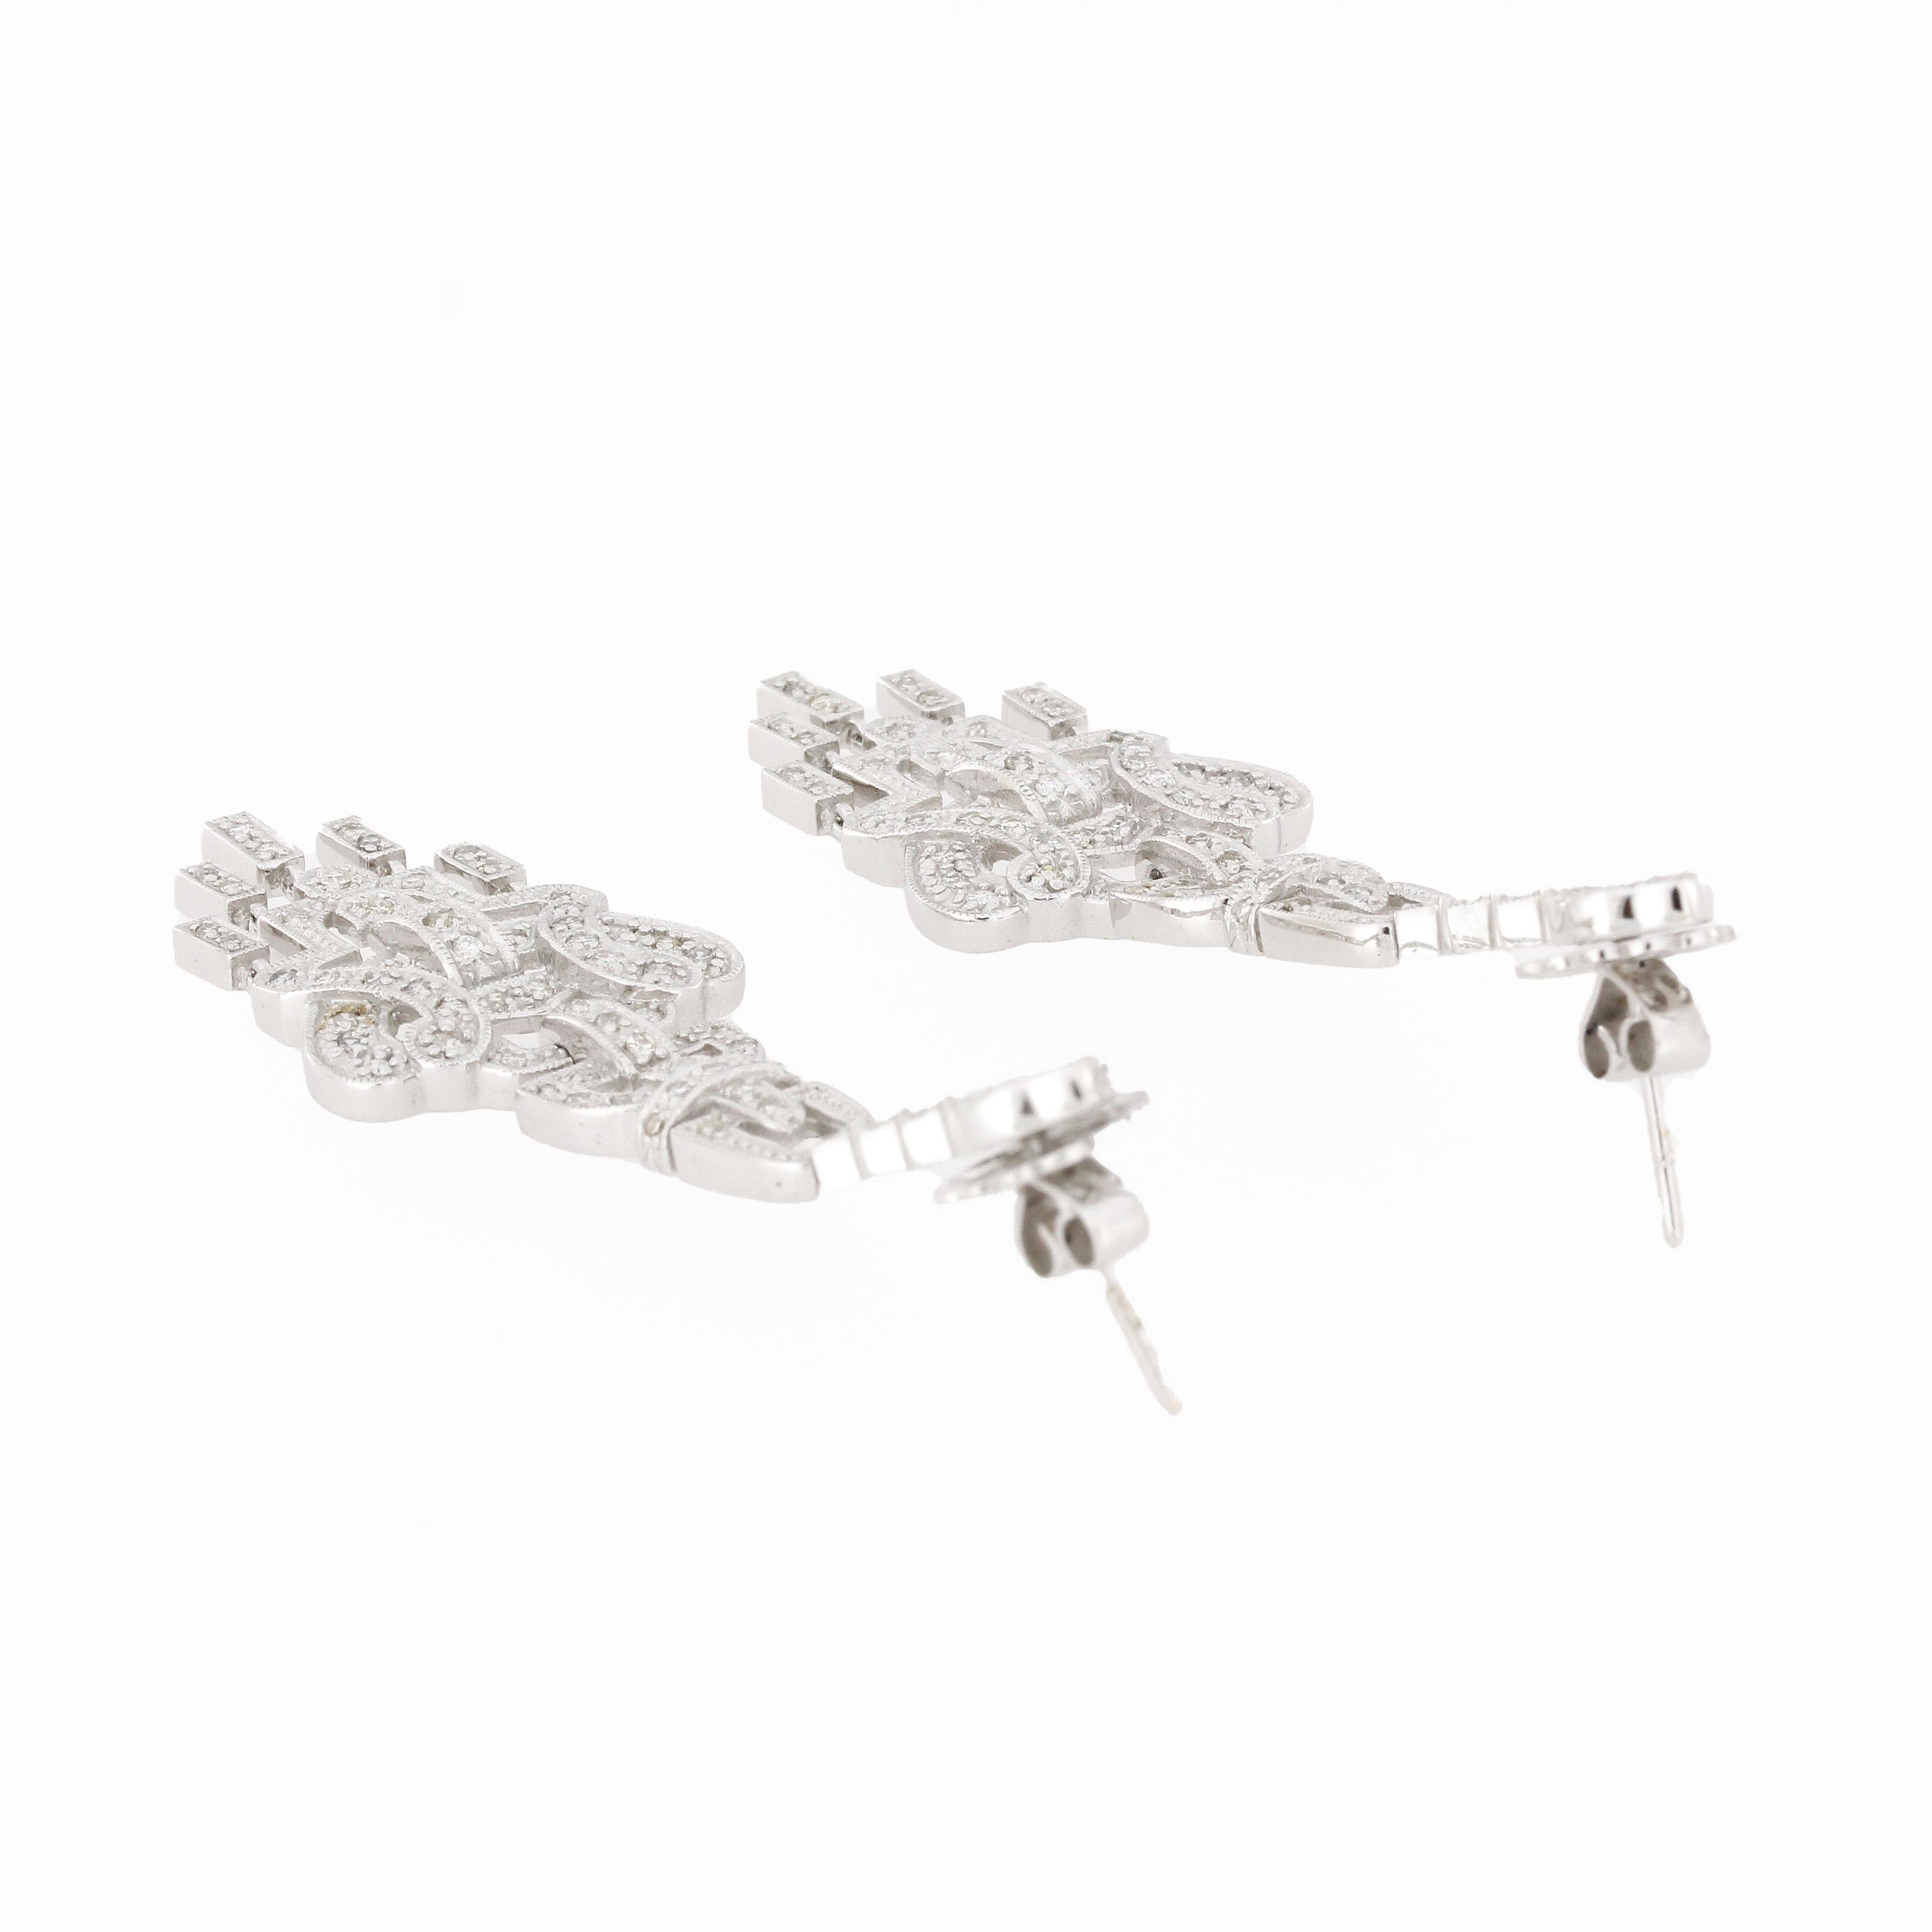 Brilliant Cut 1.15 Carat Diamond Drop Earrings in White Gold For Sale